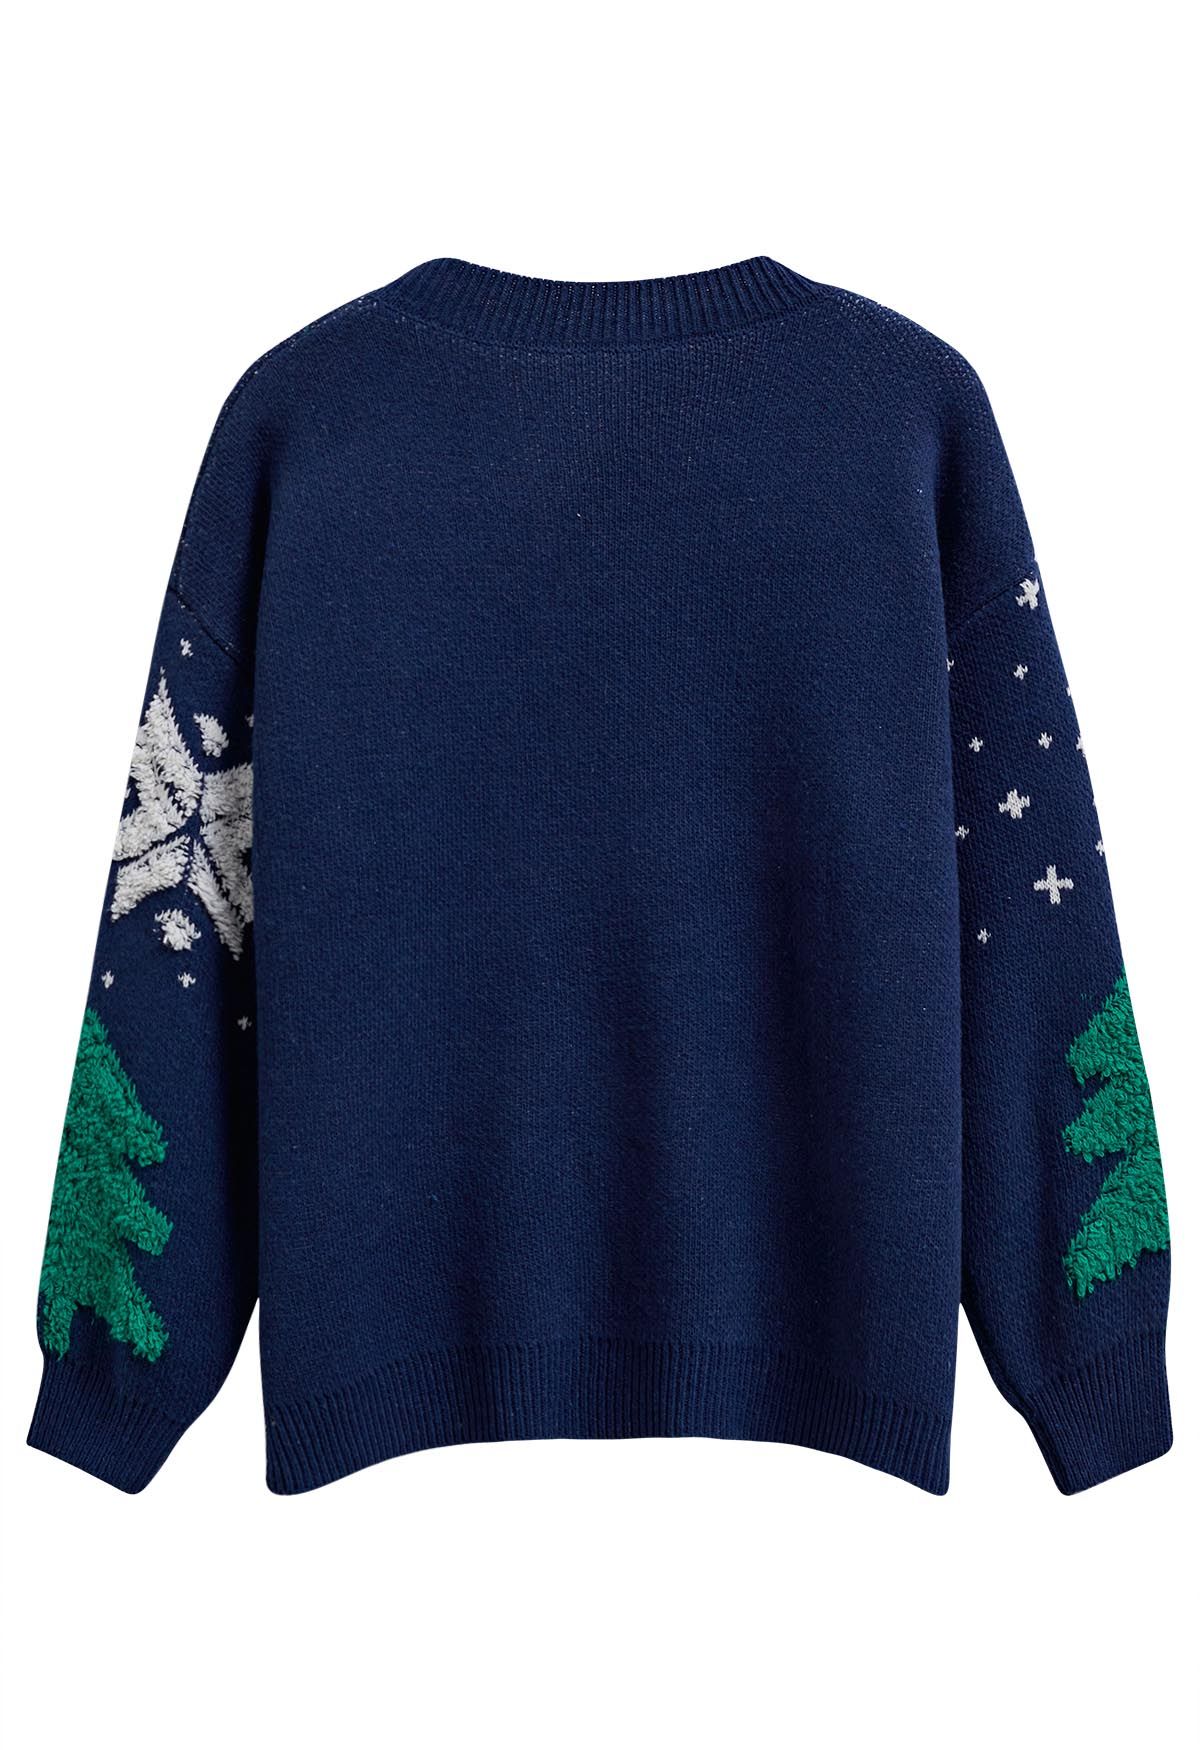 Christmas Tree and Snowflake Jacquard Knit Sweater in Indigo